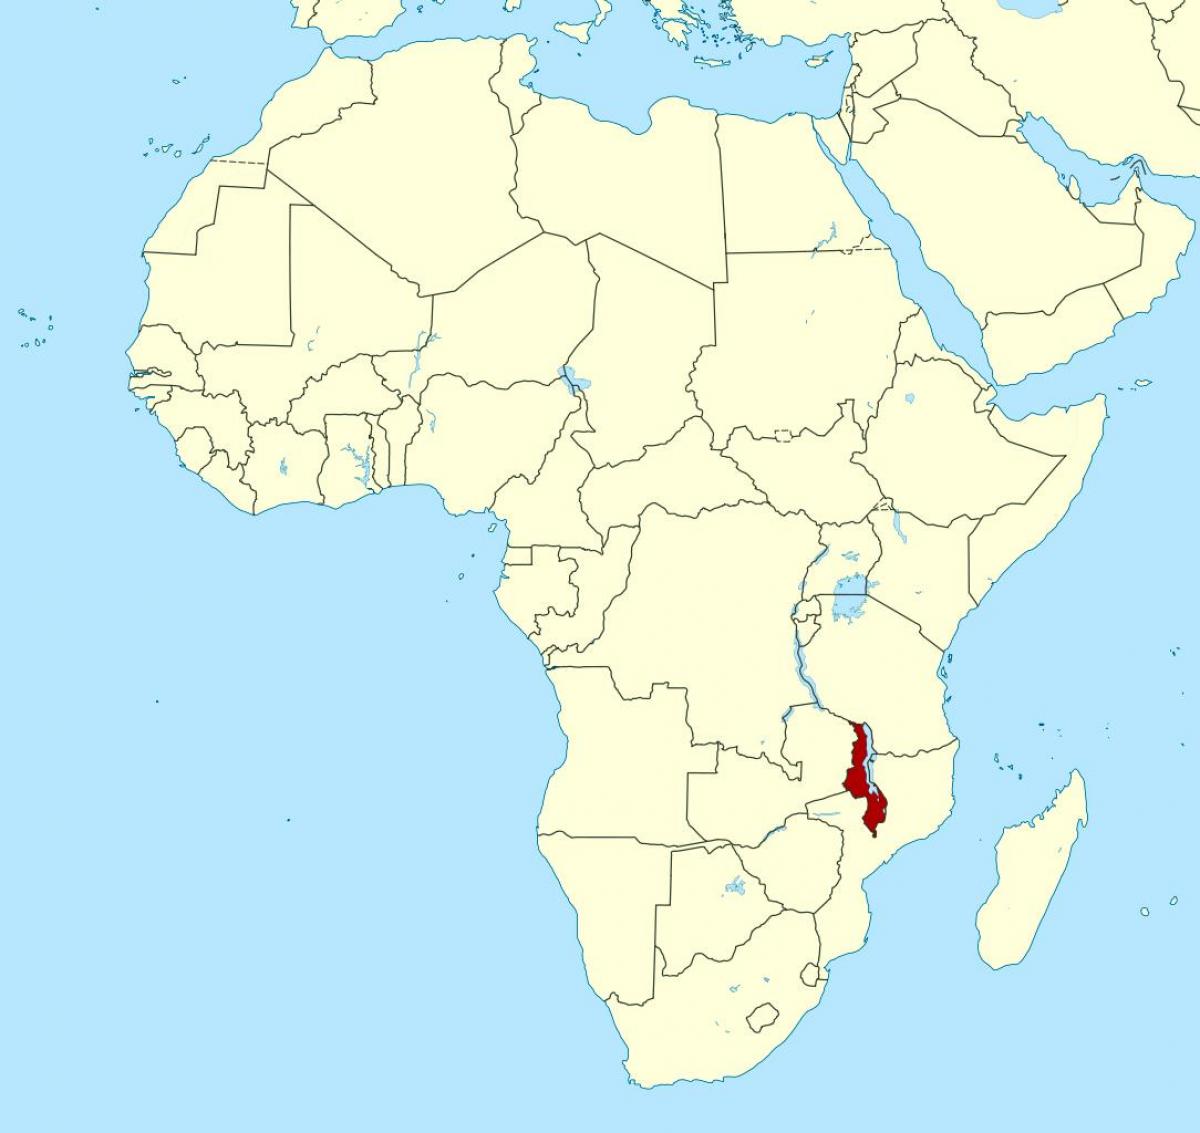 Malawi Lage auf Weltkarte